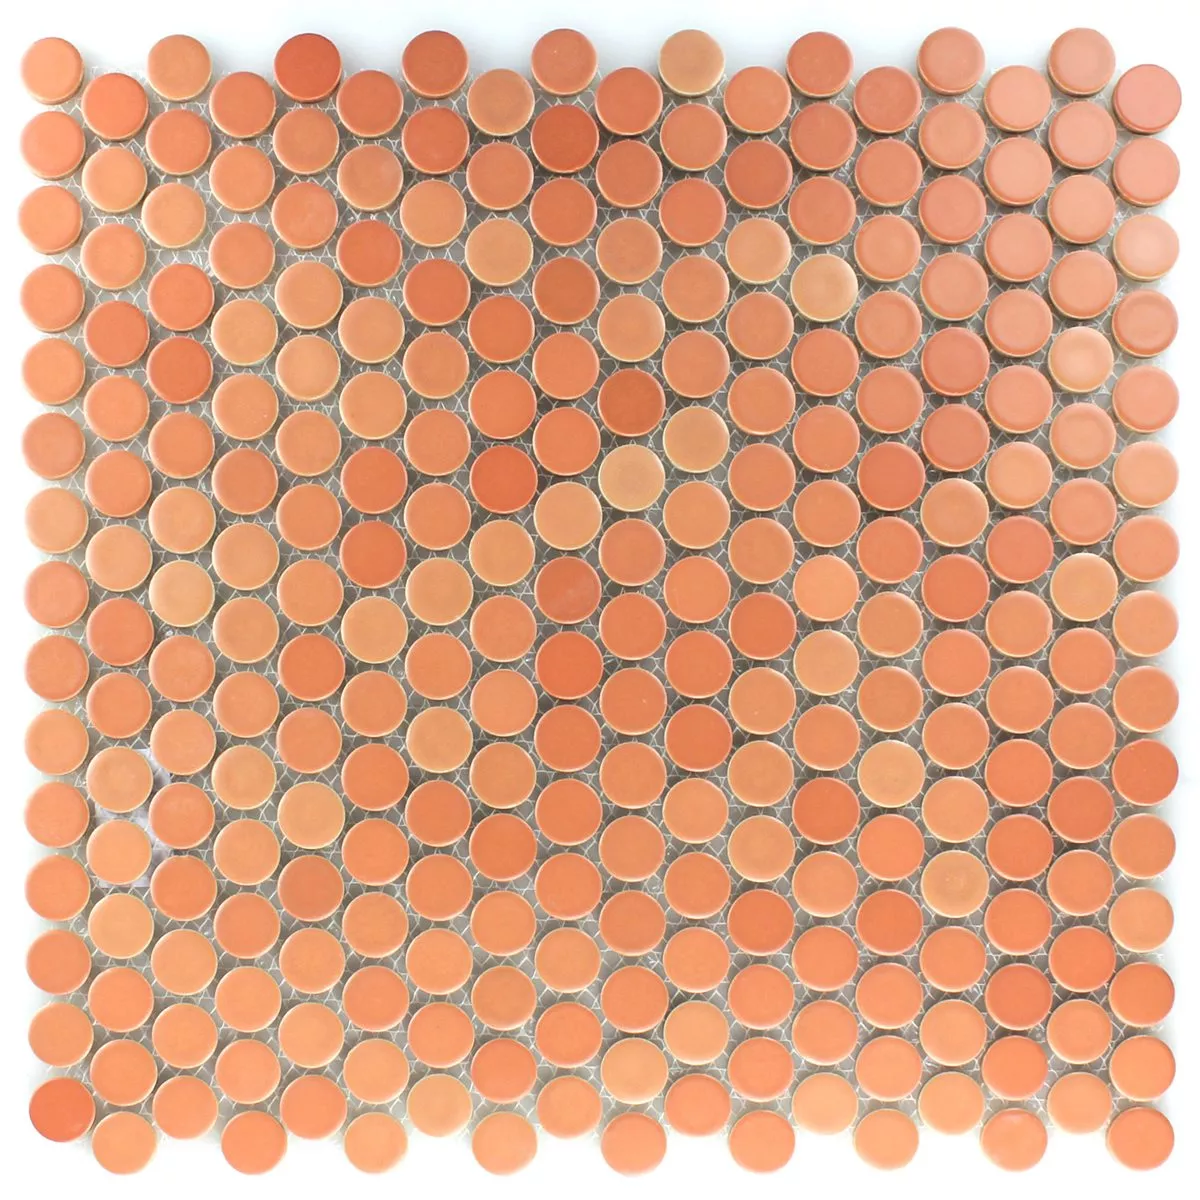 Ceramic Button Mosaic Tiles Round Terracotta